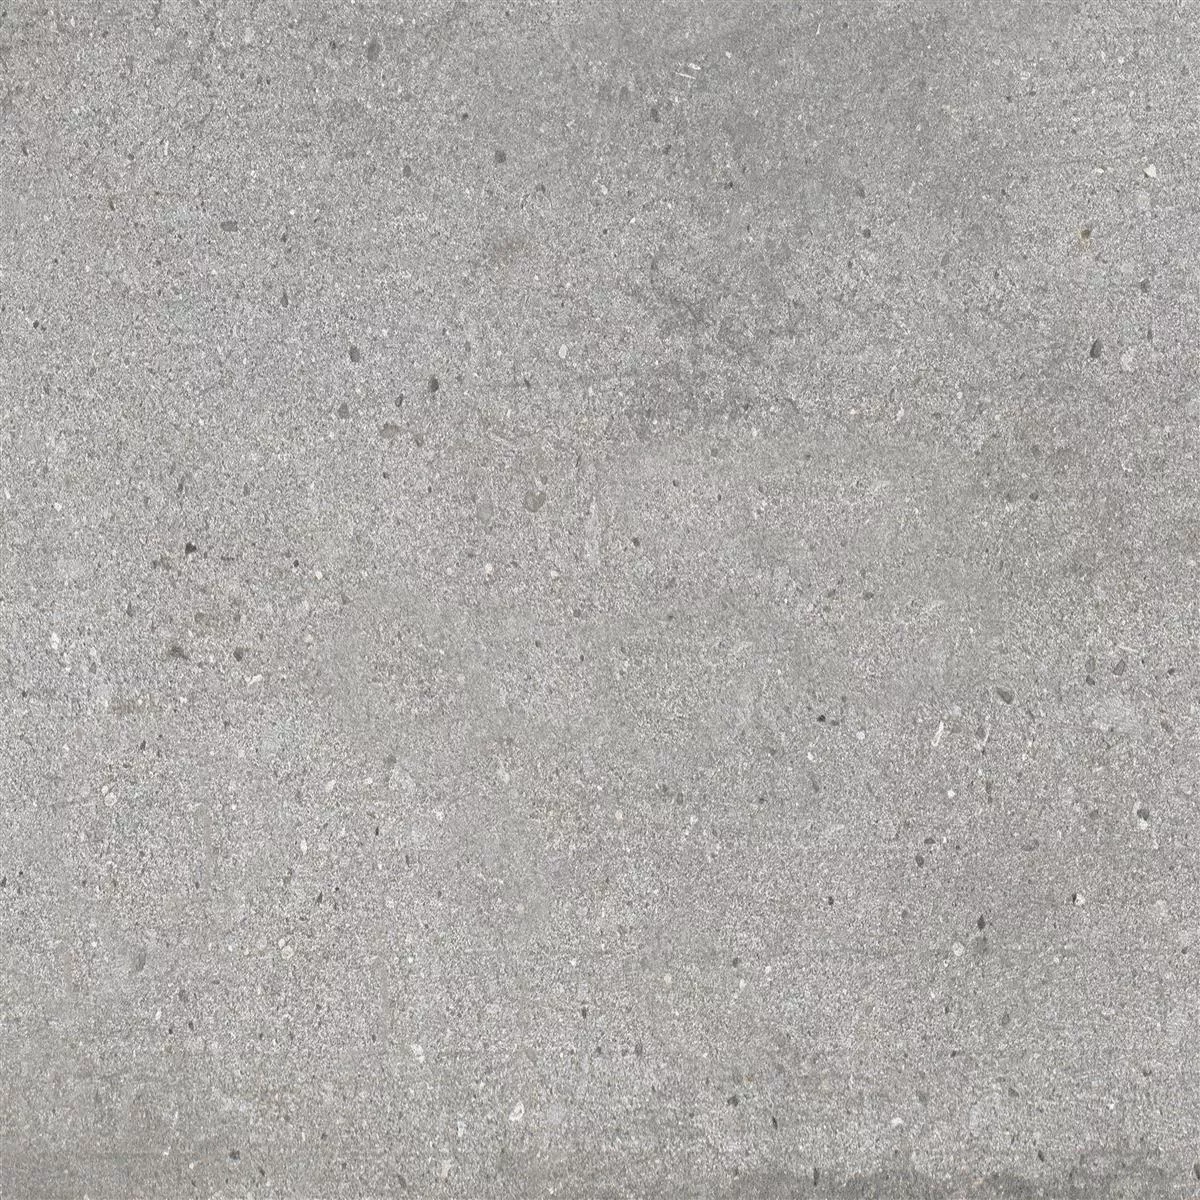 Ladrilhos Freeland Olhar de Pedra R10/B Cinza 60x60cm